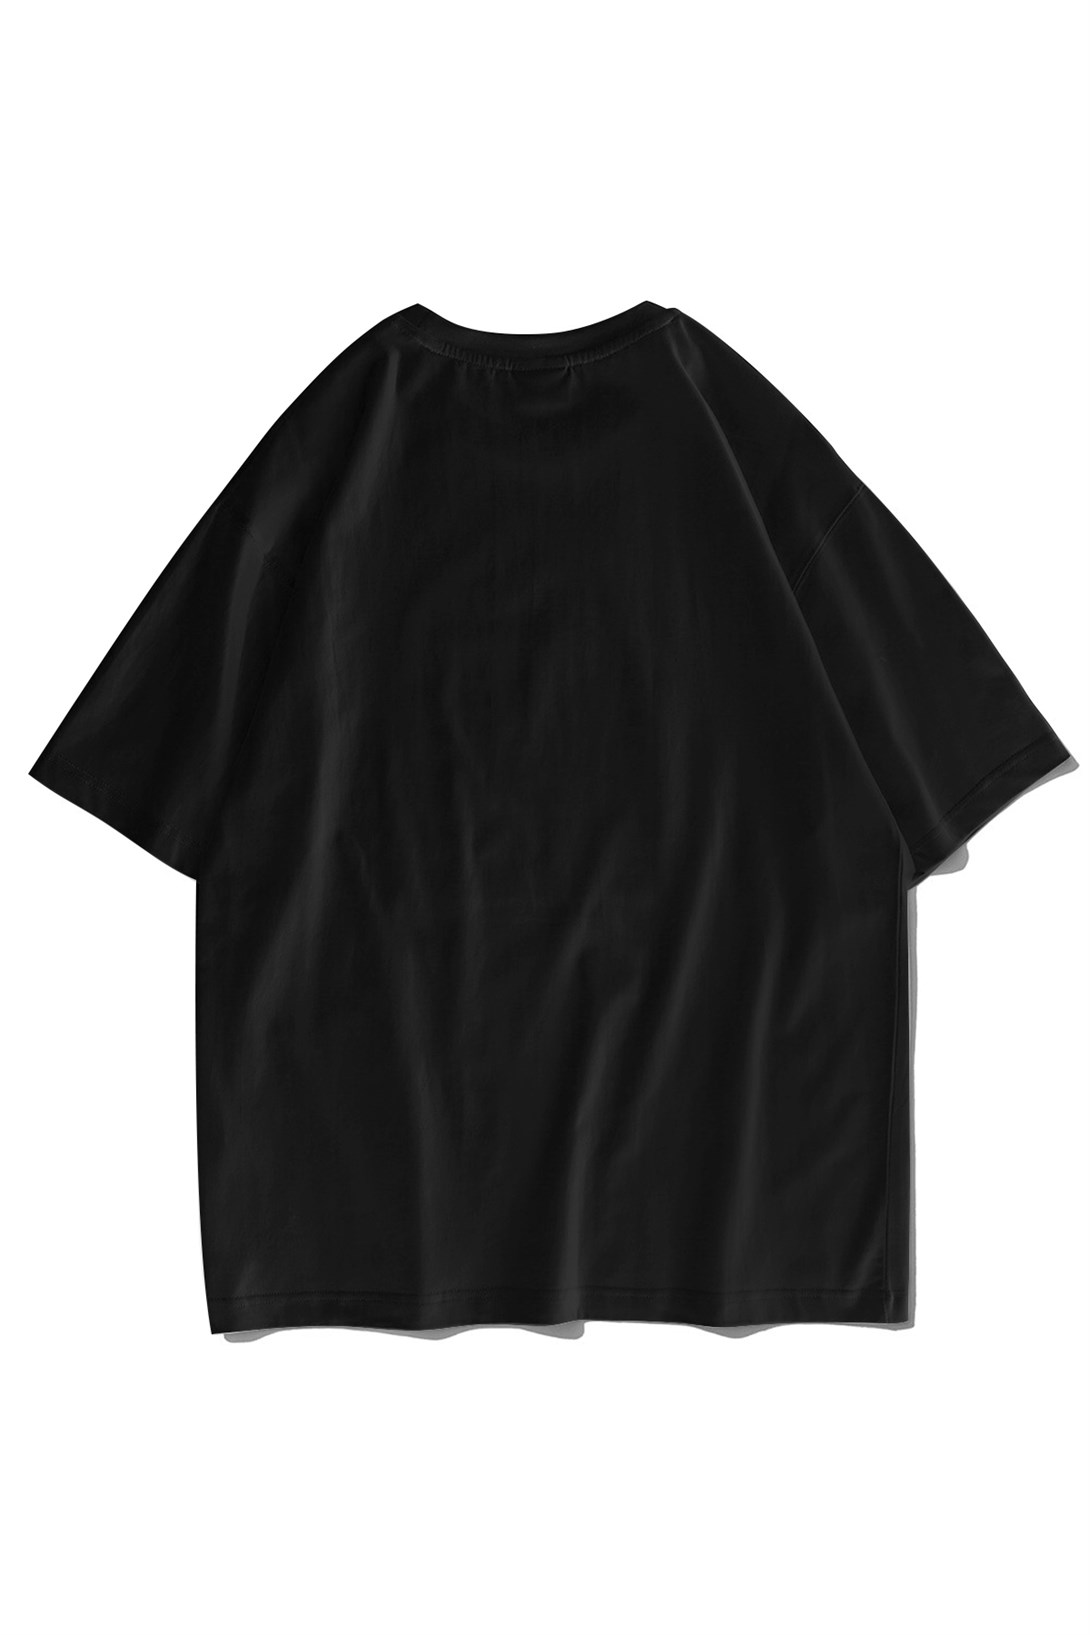 Trendiz Unisex Satisfied Siyah Tshirt